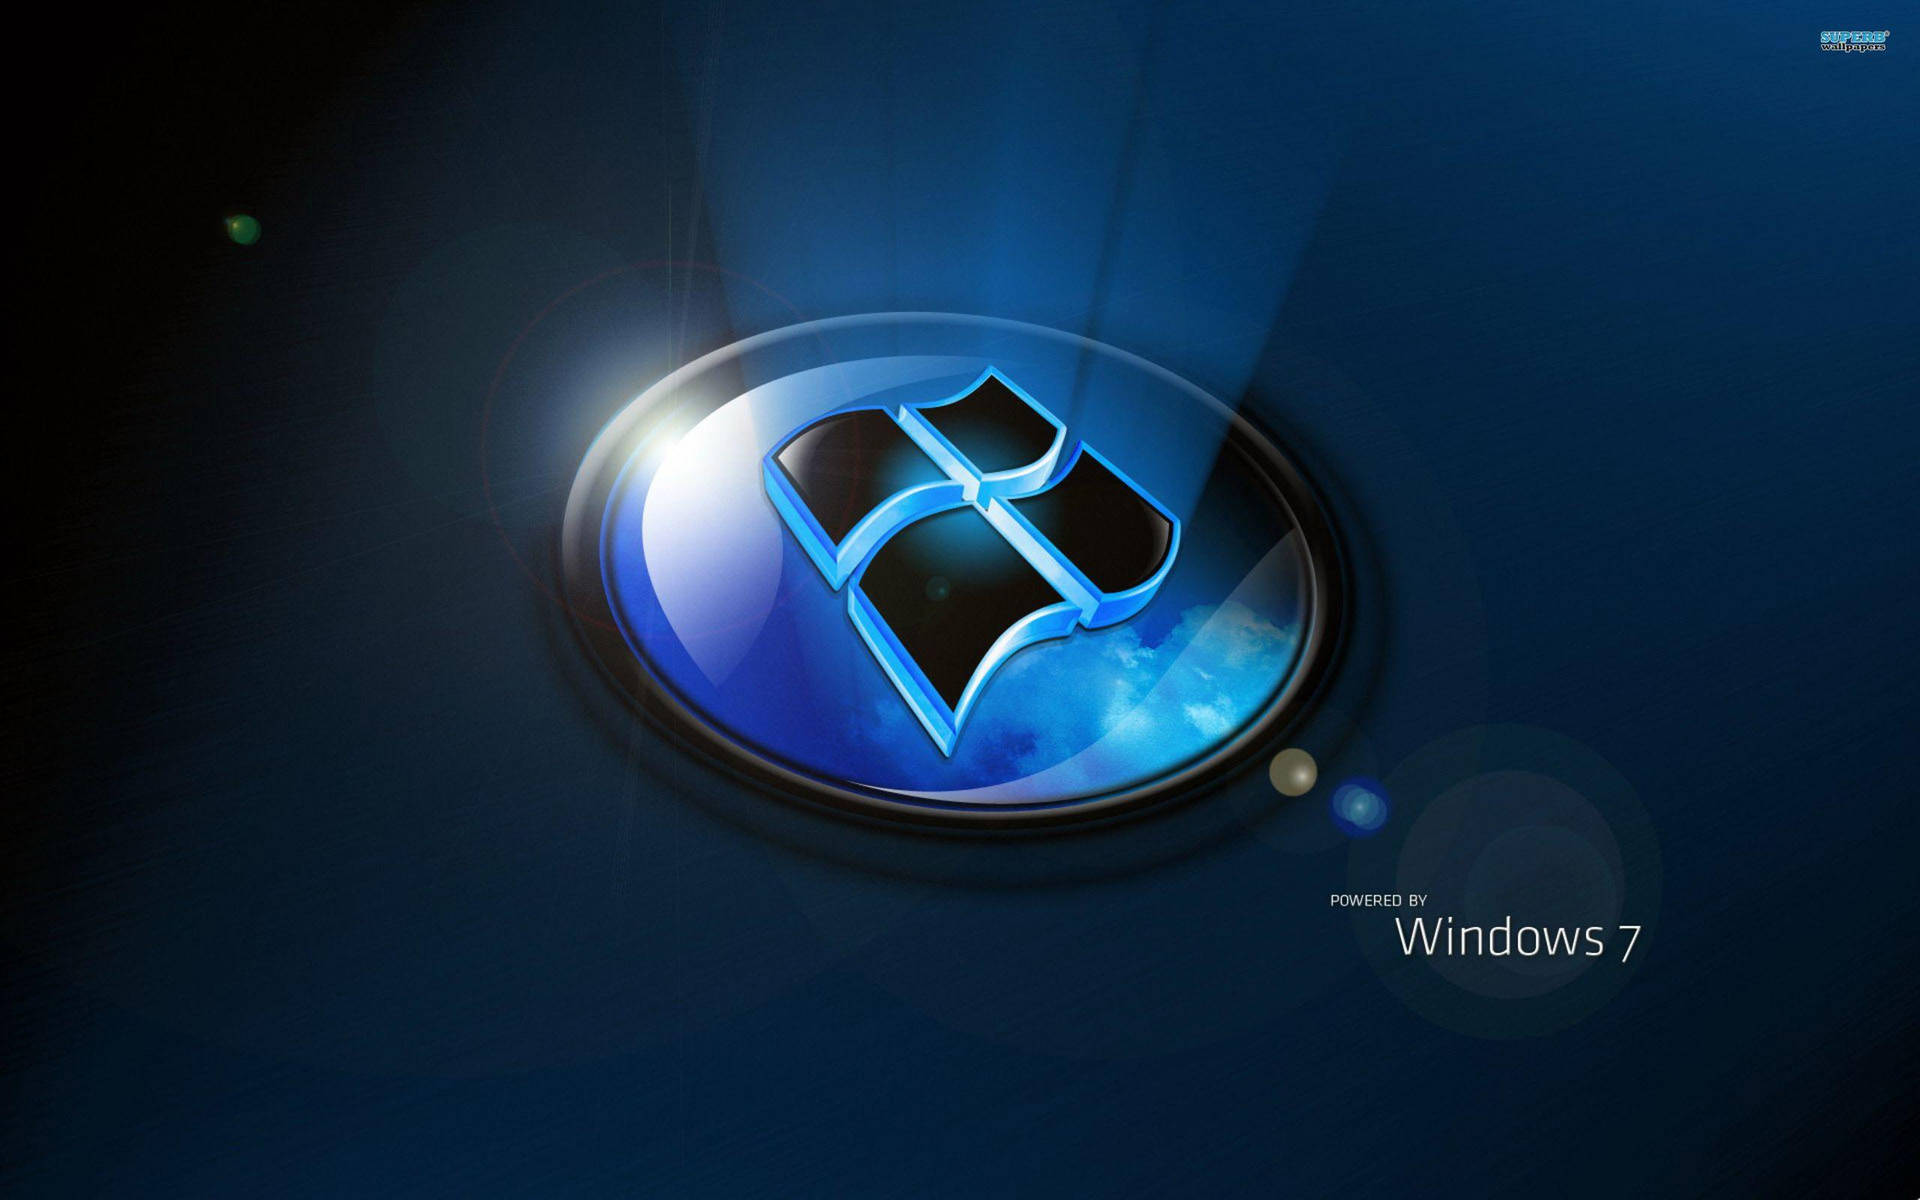 Dell X Windows 7 Background